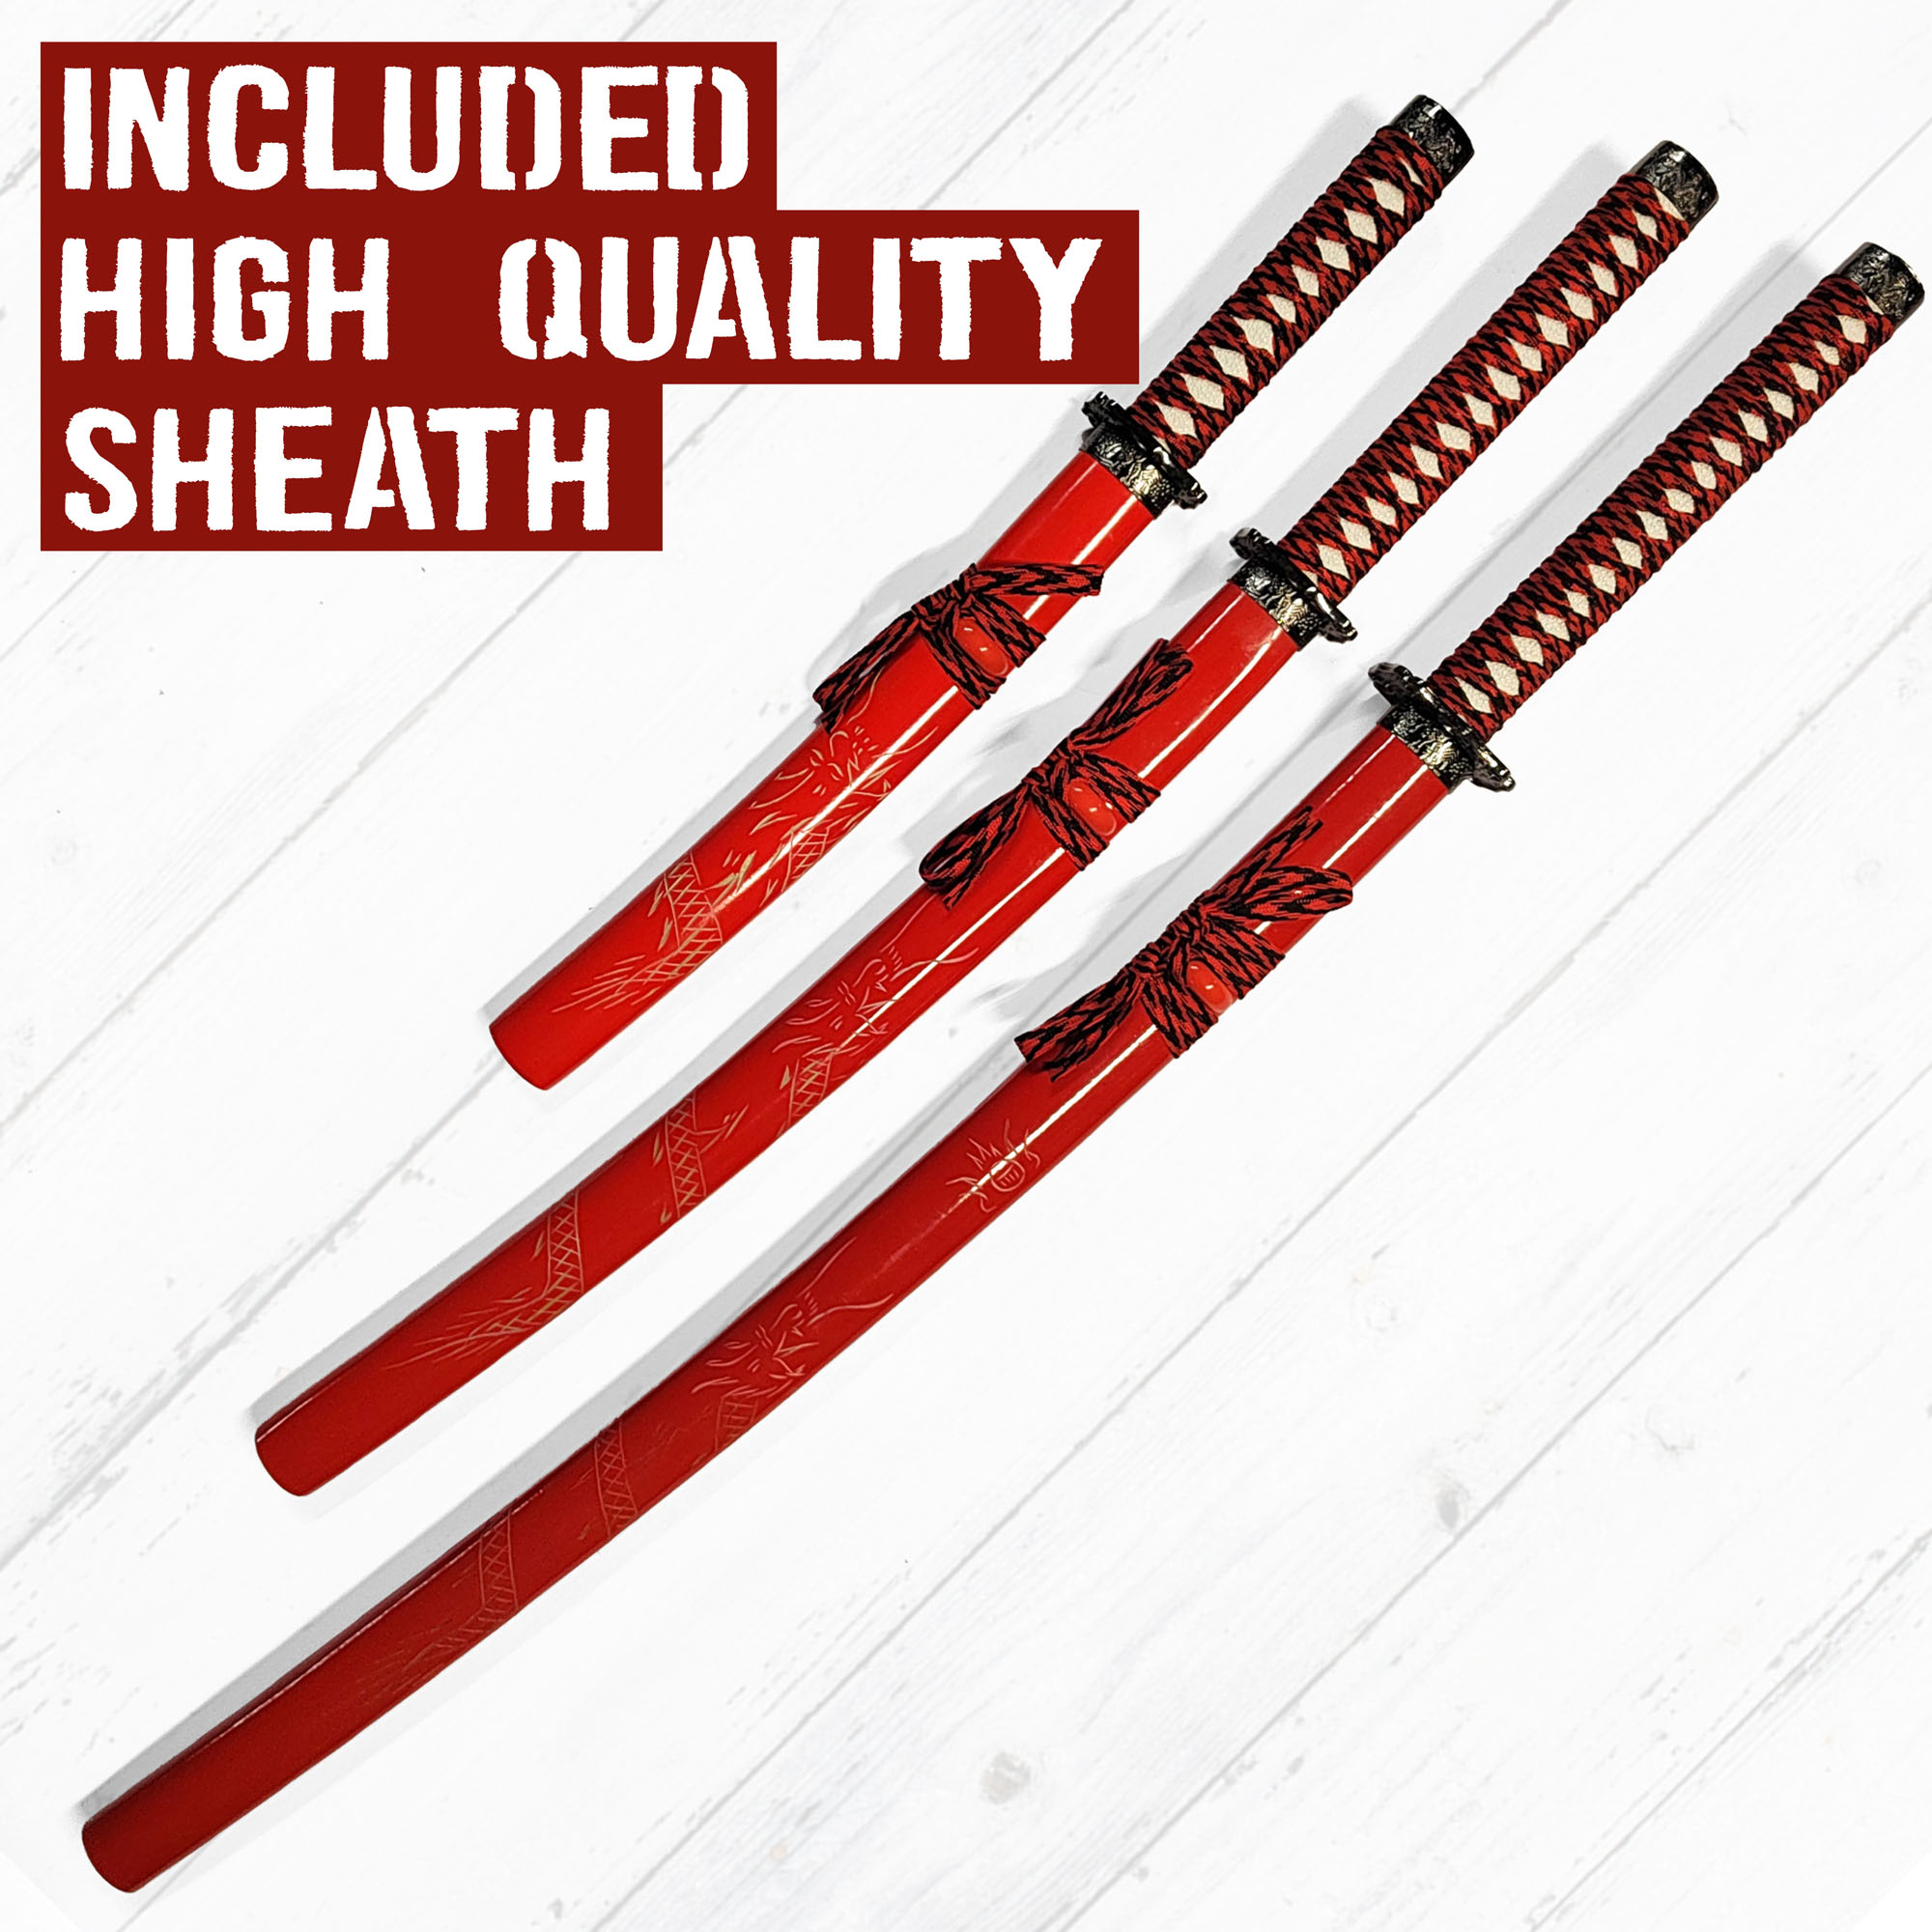 Samurai Sword Set of 3 with Stand - Red (Katana, Wakizashi and Tanto)